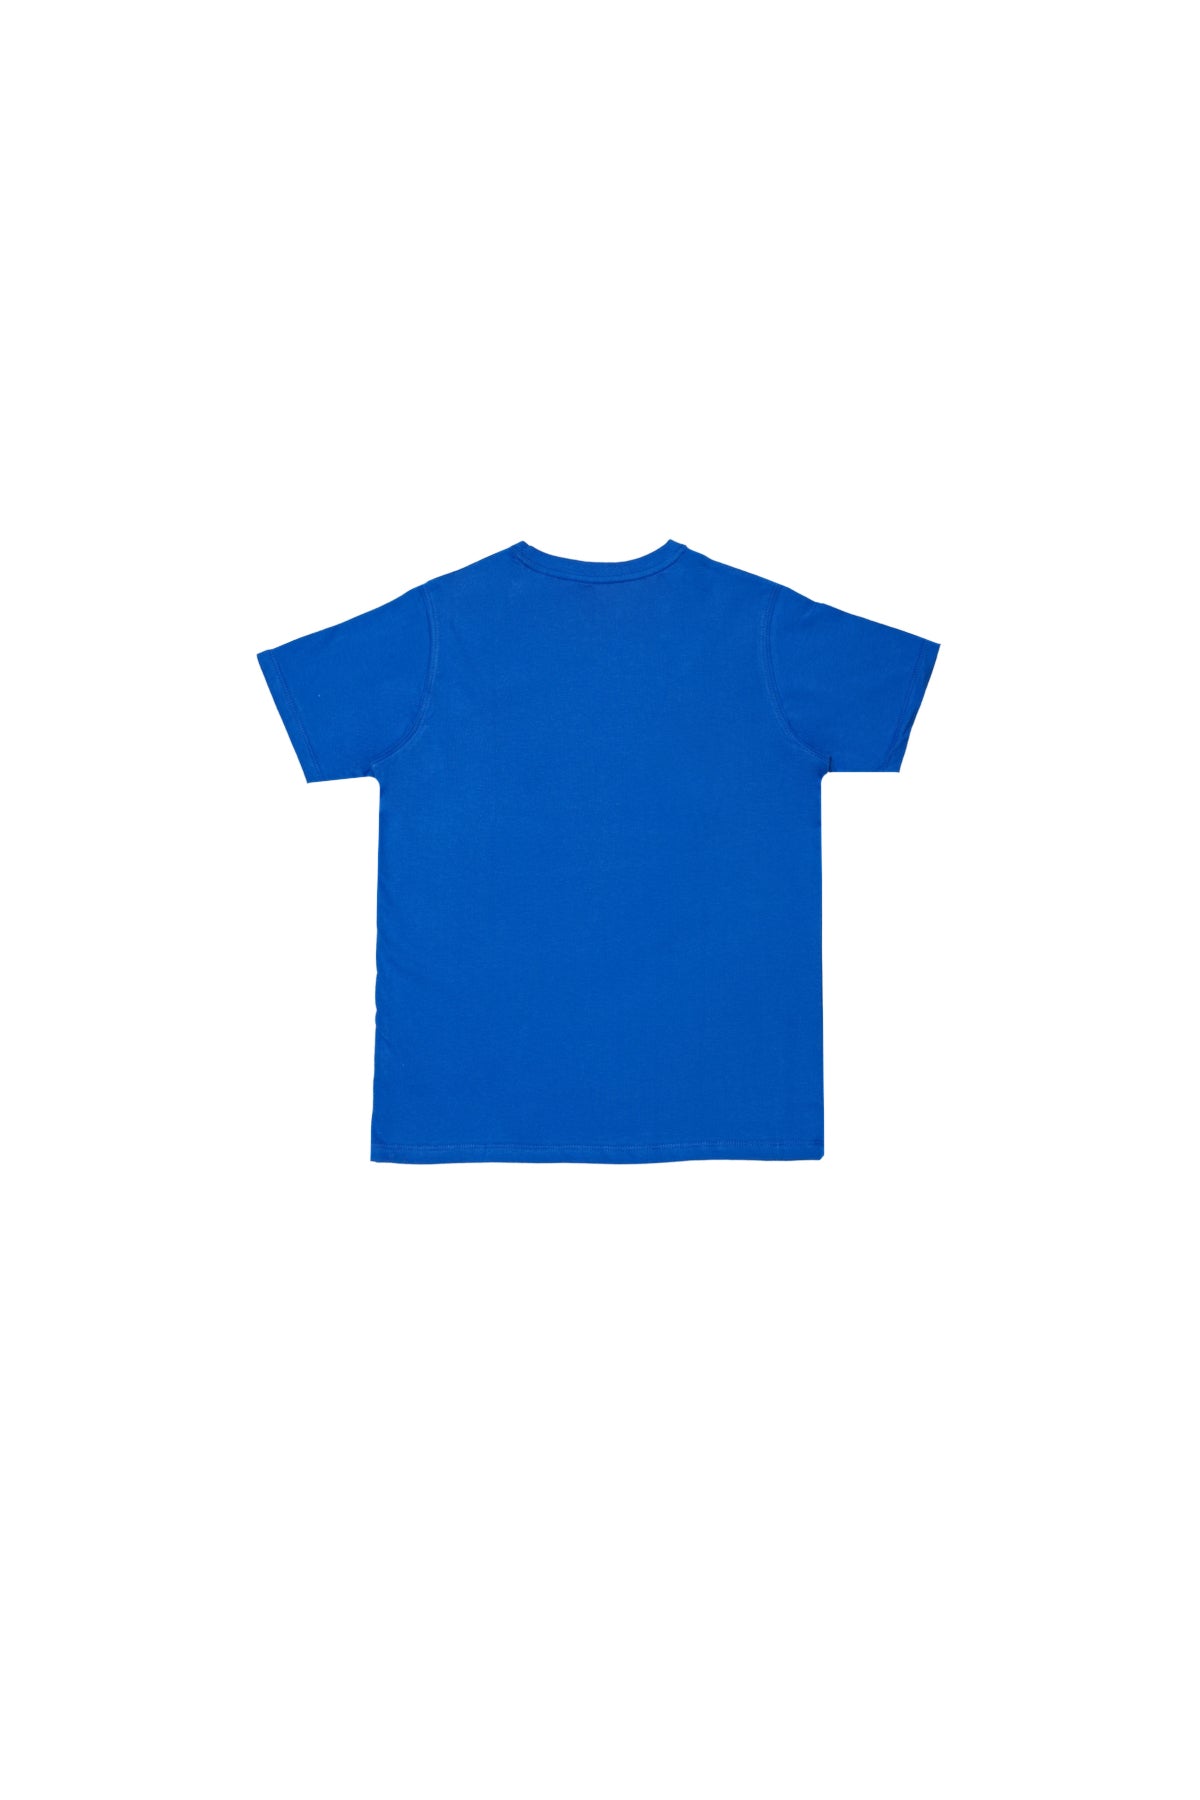 T-Shirts (Pack Of 2) (SSBKP-147)